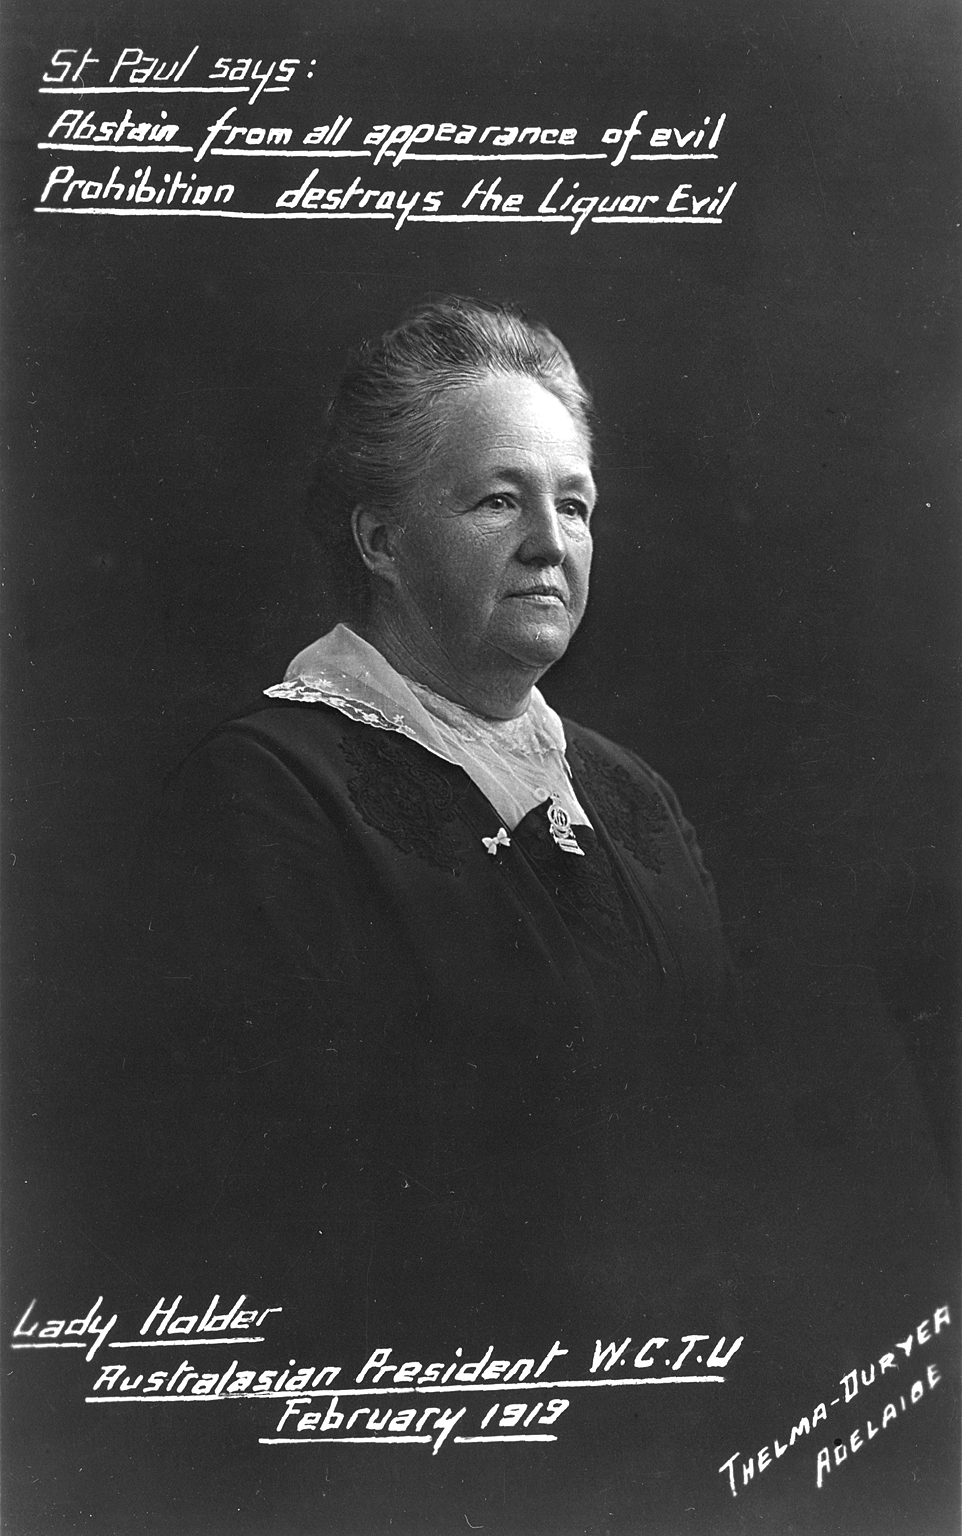 “Lady Holder Australasian President WCTU 1919”, Thela Duryer, February 1919, Woman’s Christian Temperance Union, 2001.0085.00033.